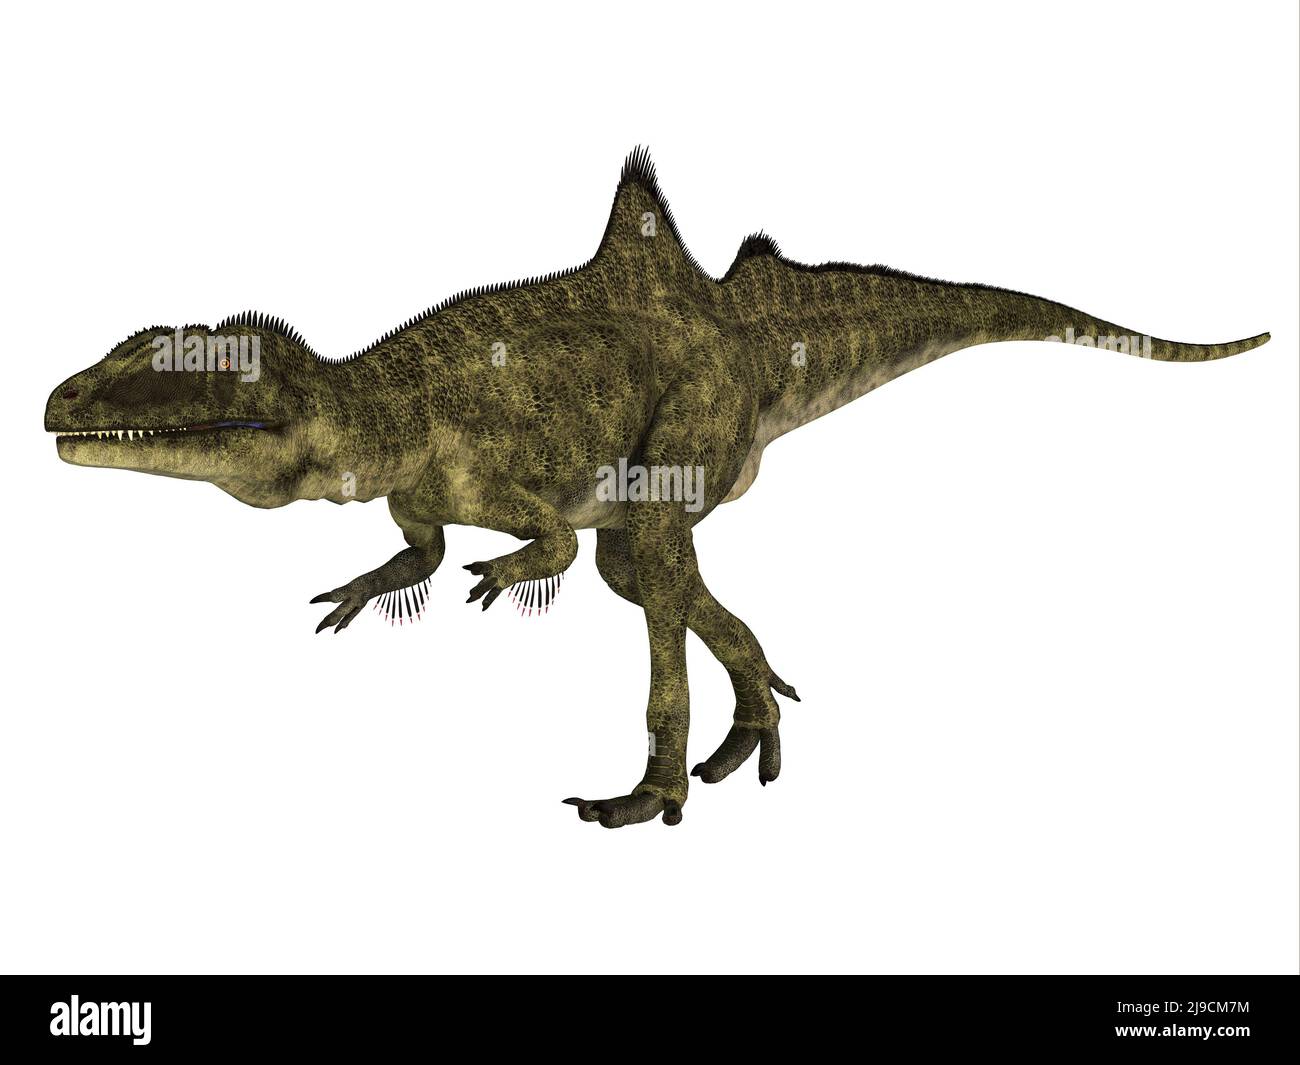 Concavenator era un dinosaurio terópodo carnívoro que vivió en España durante el período Cretácico. Foto de stock